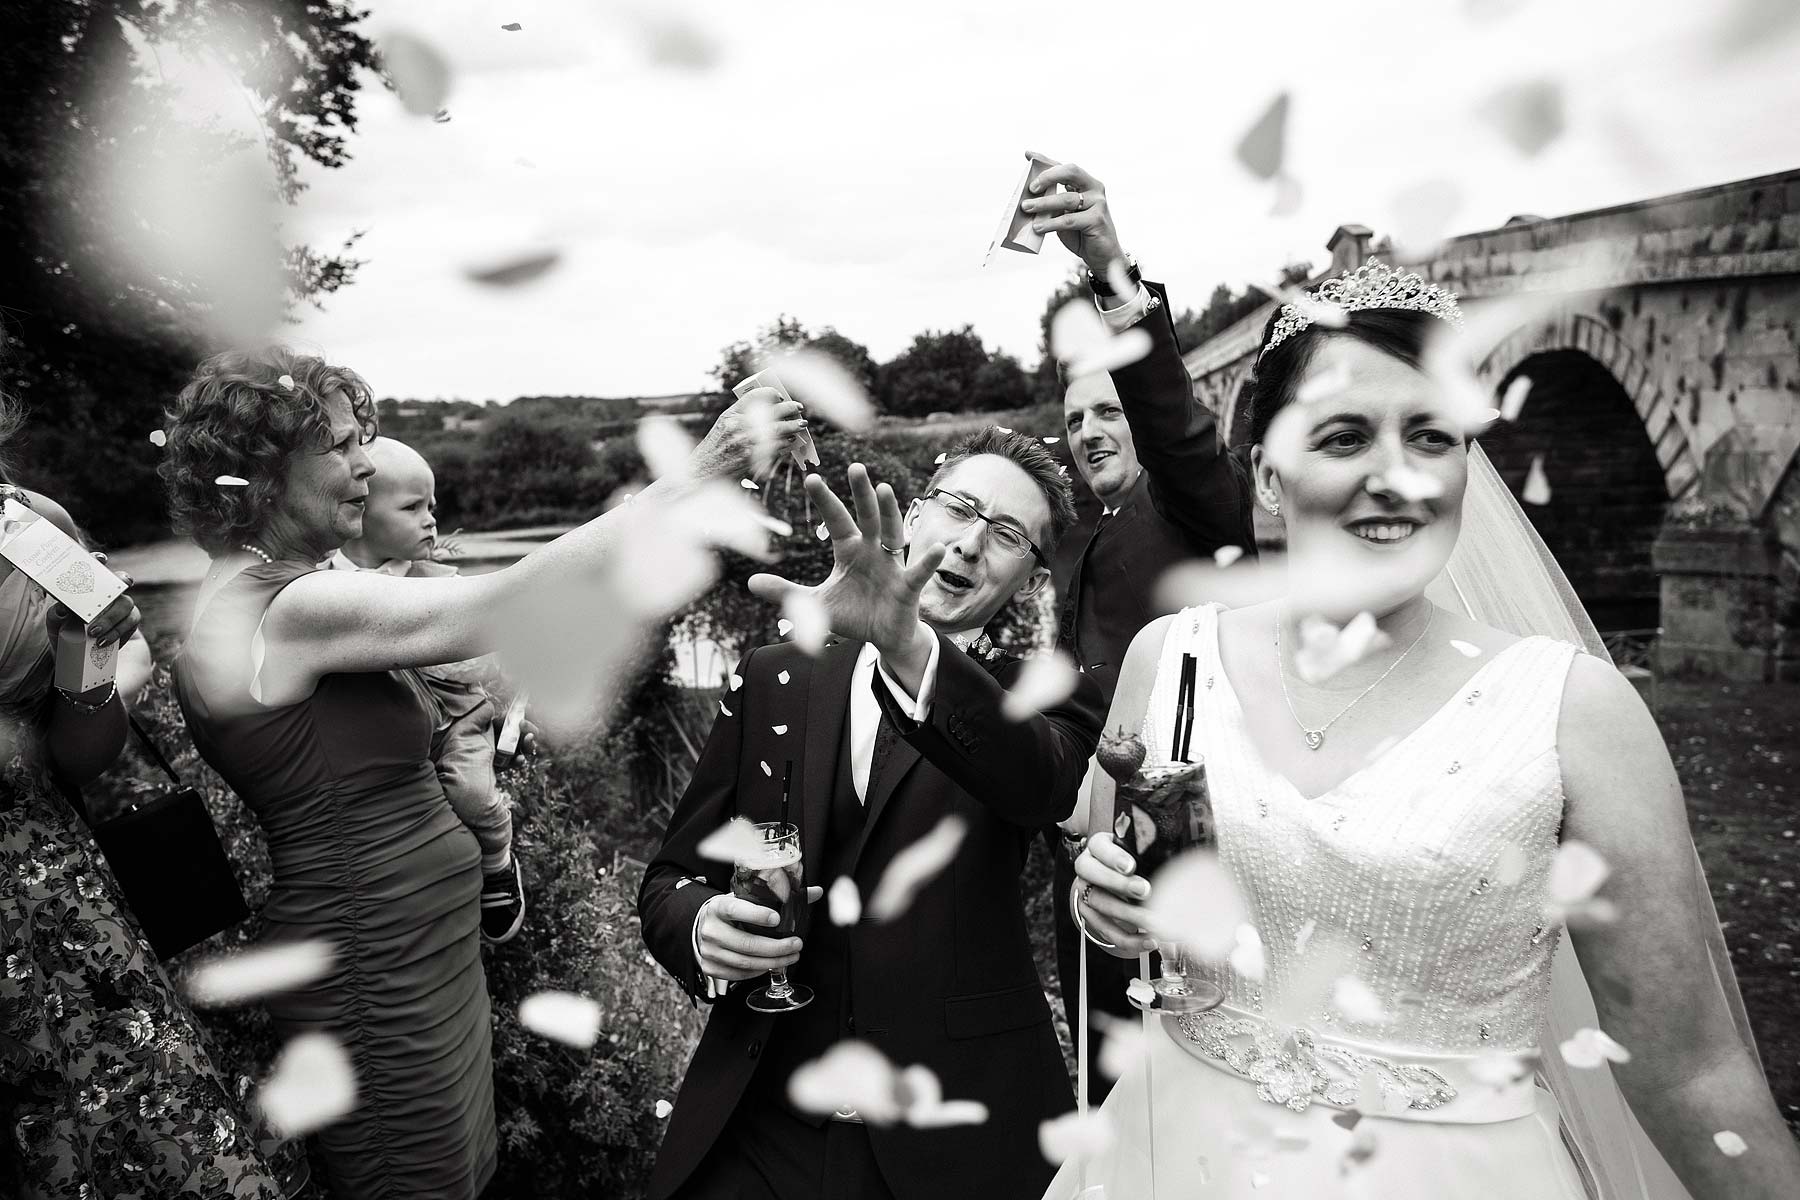 Creative wedding photography by Documentary Wedding Photographer Stuart James at Mytton and Mermaid in Shrewsbury